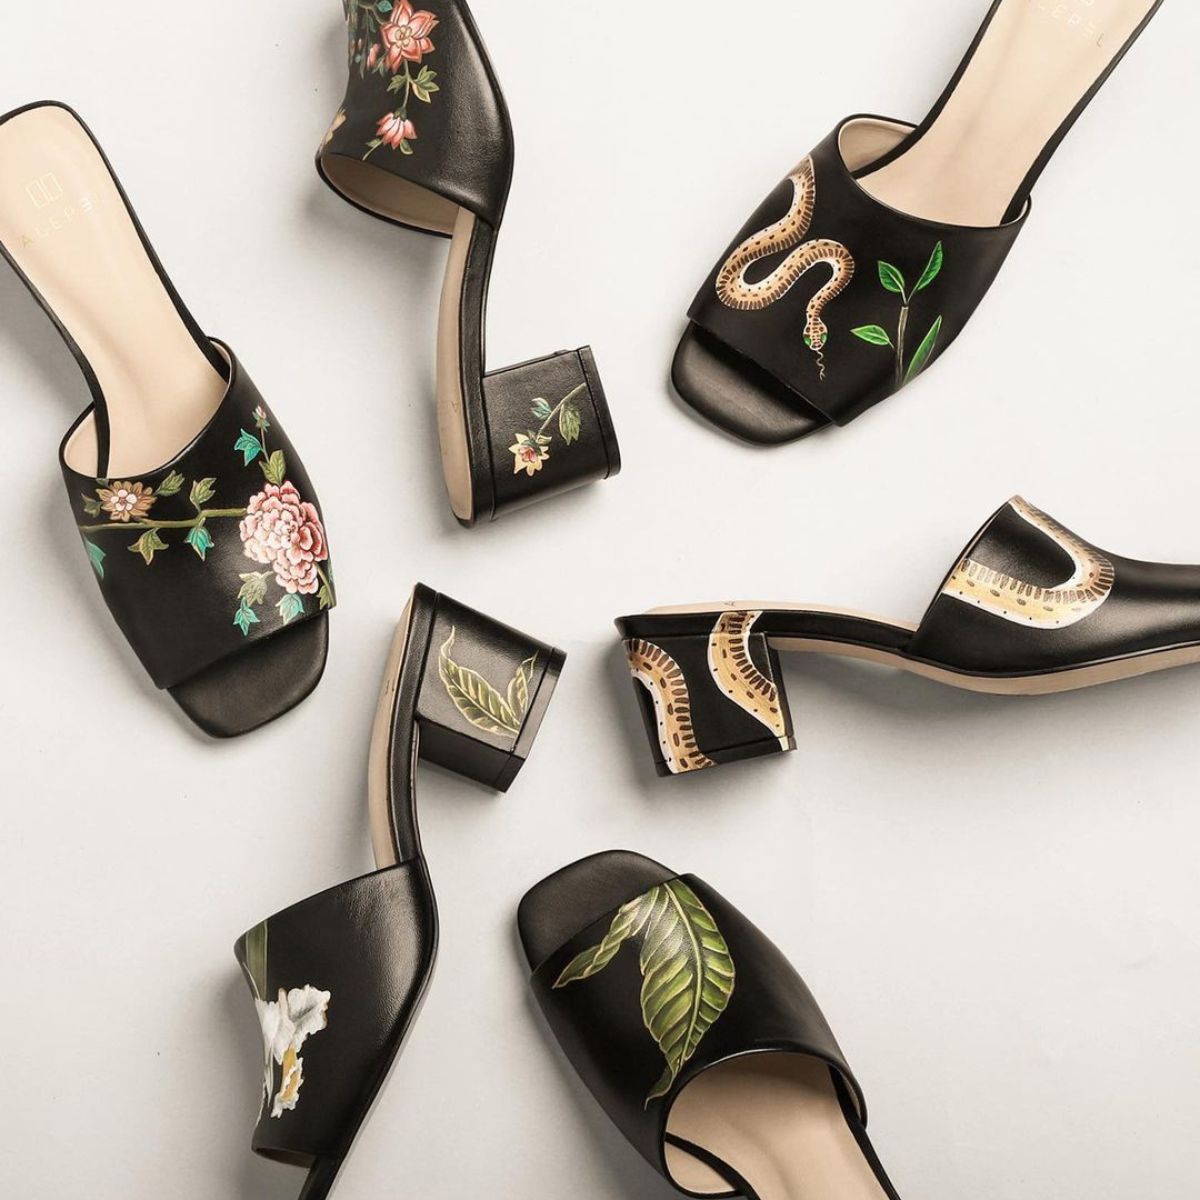 Alepel flora and fauna shoe designs on Thursd